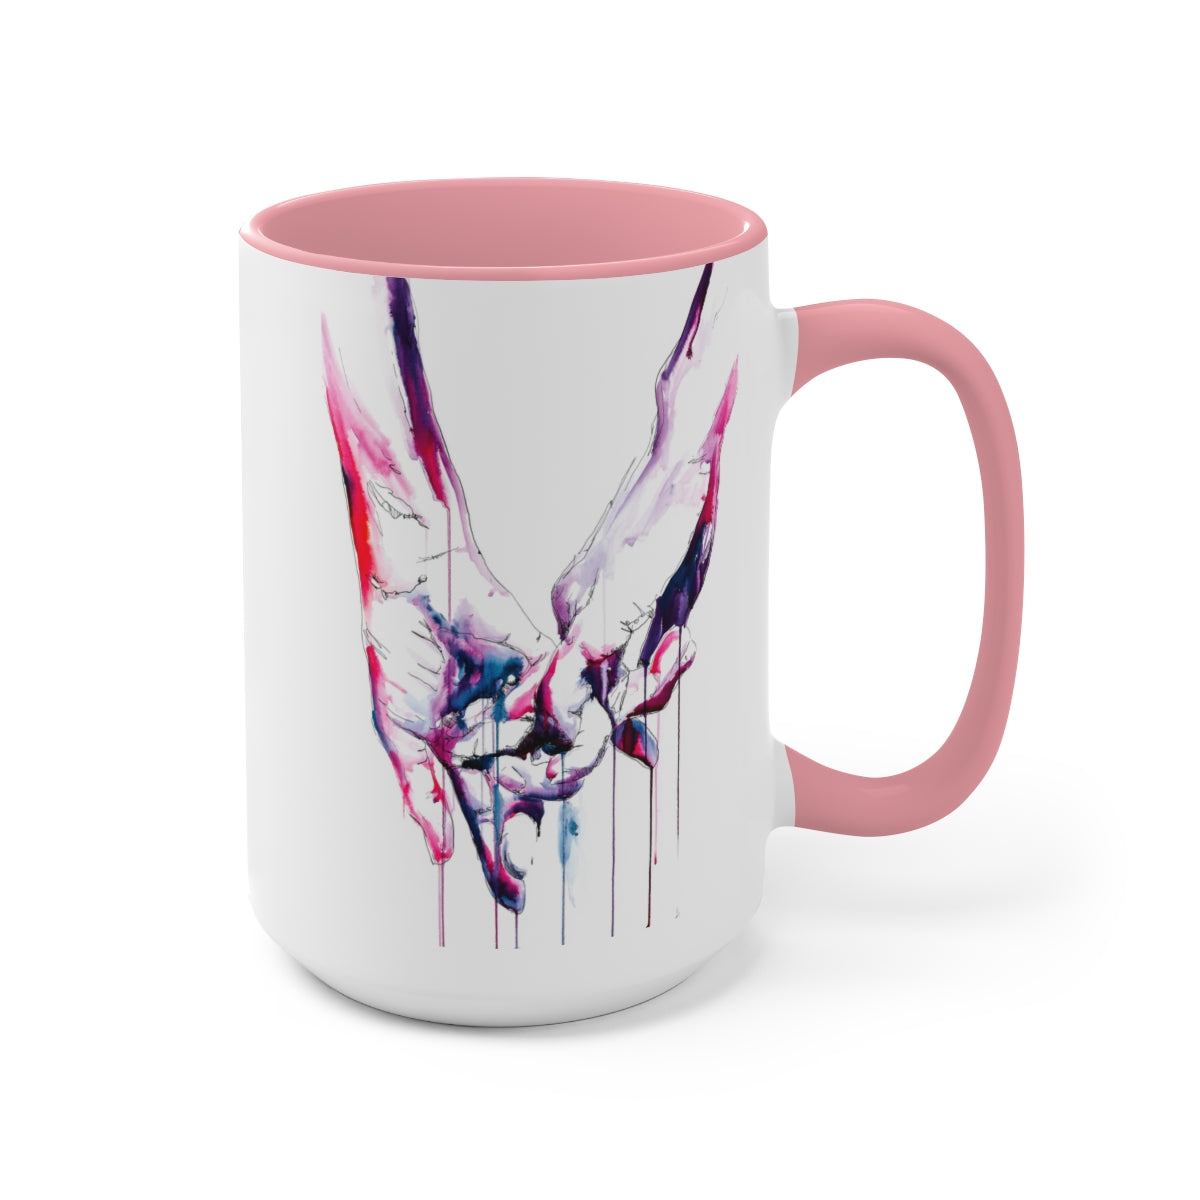 Simple Gesture of Love - Pinkie Love - Two-Tone Coffee Mugs, 15oz